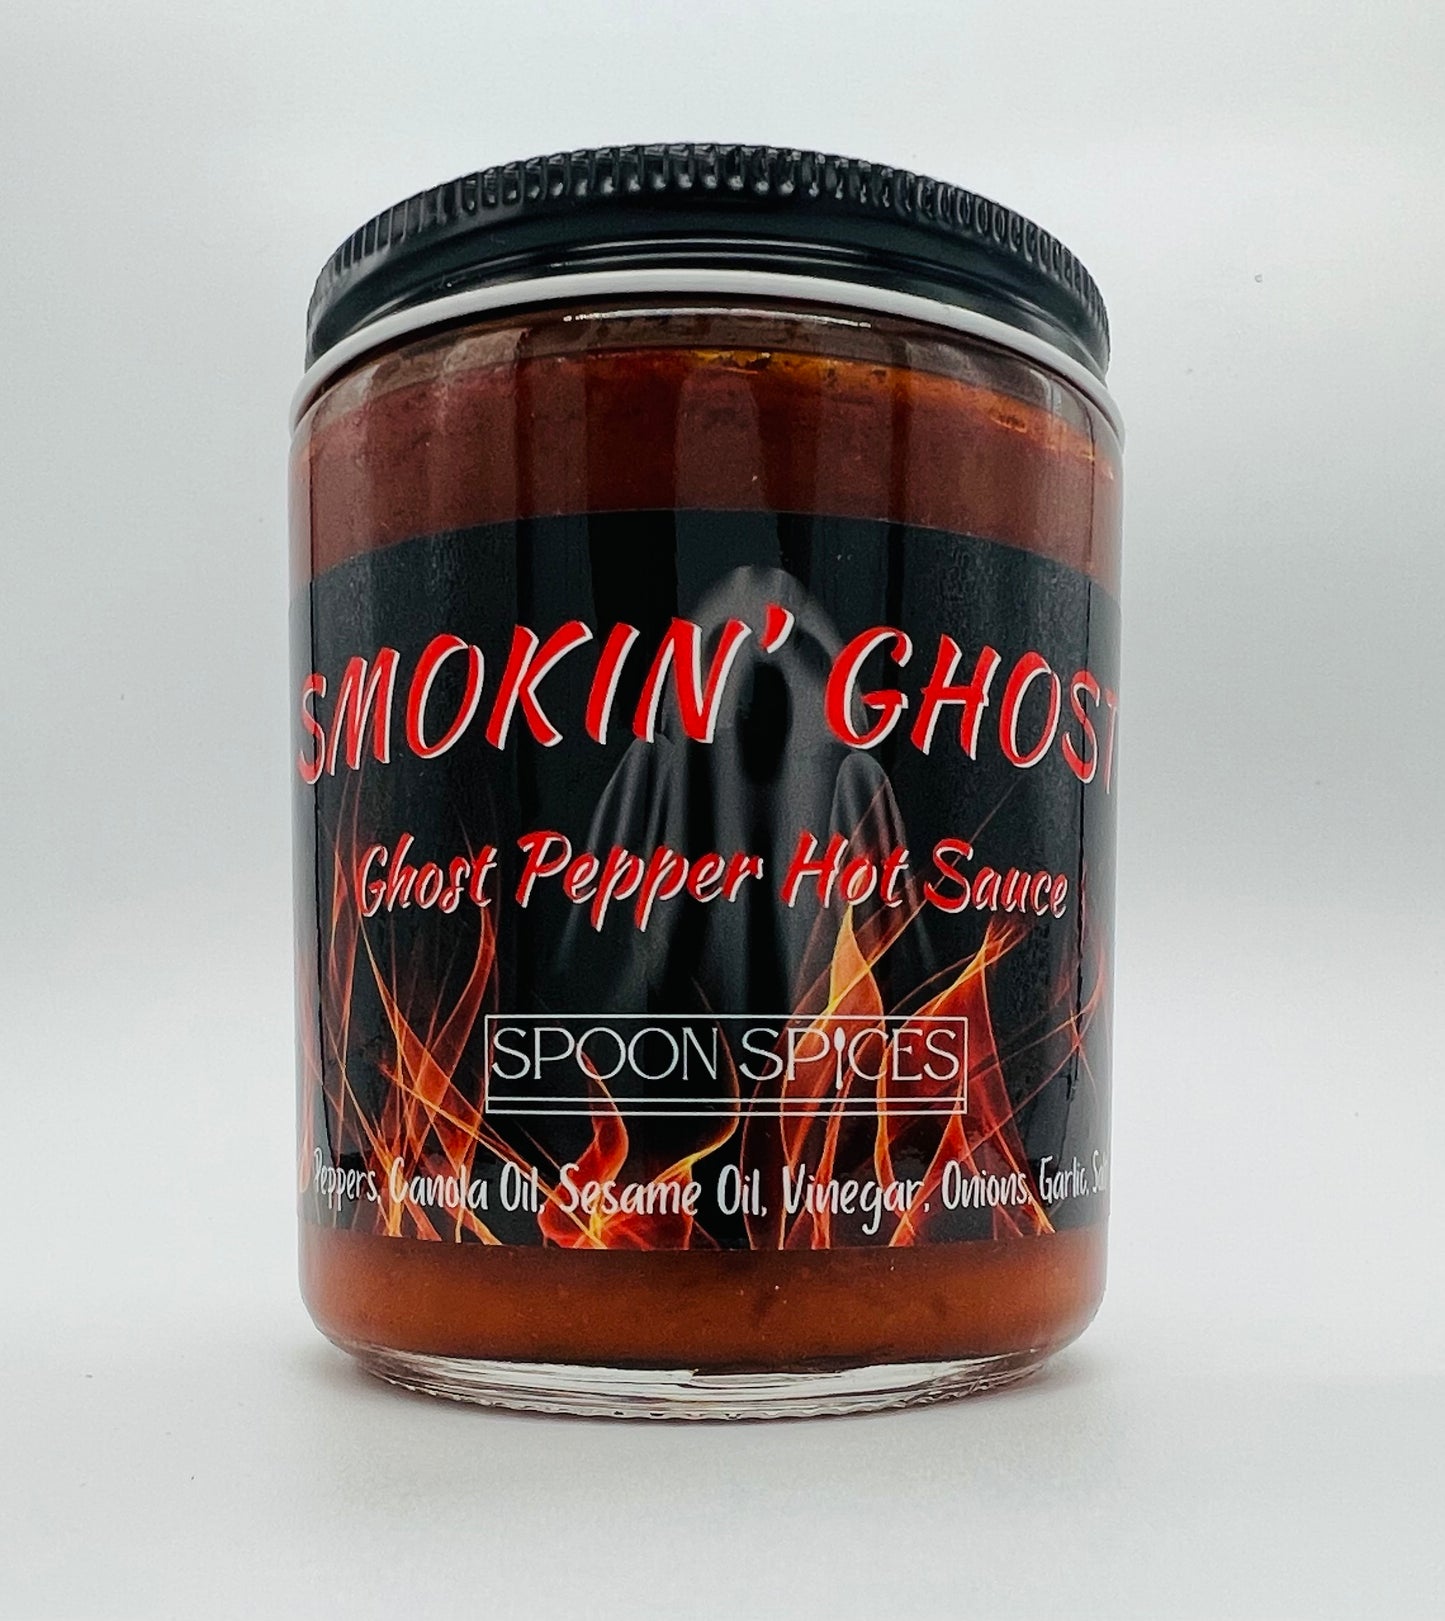 Smoking Ghost Pepper Sauce